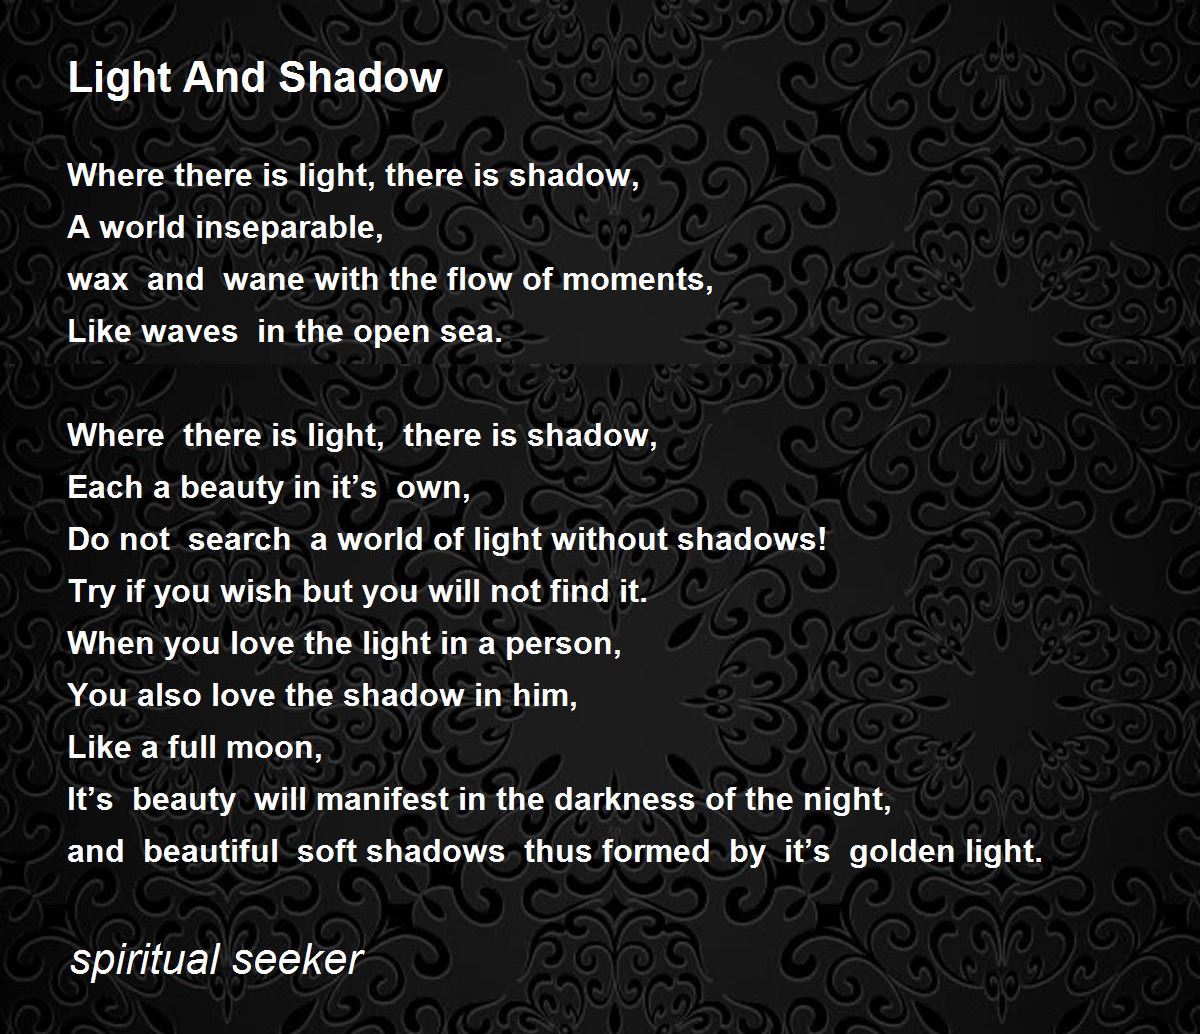 Light And Shadow Poem By Spiritual Seeker